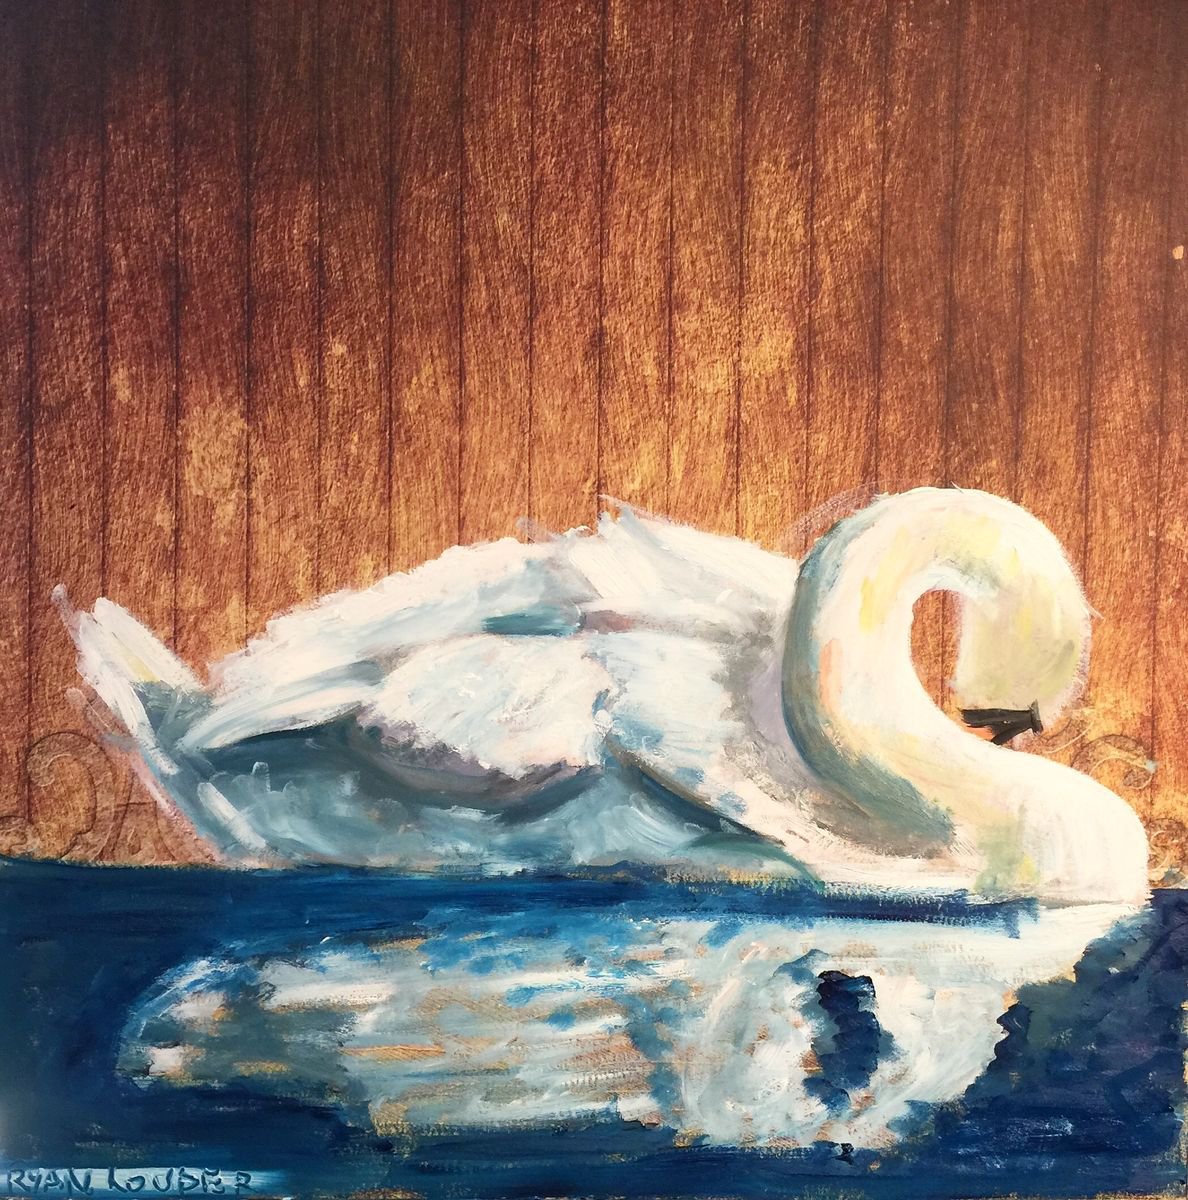 Swan Preening Oil On Paper 12x12 Study by Ryan  Louder